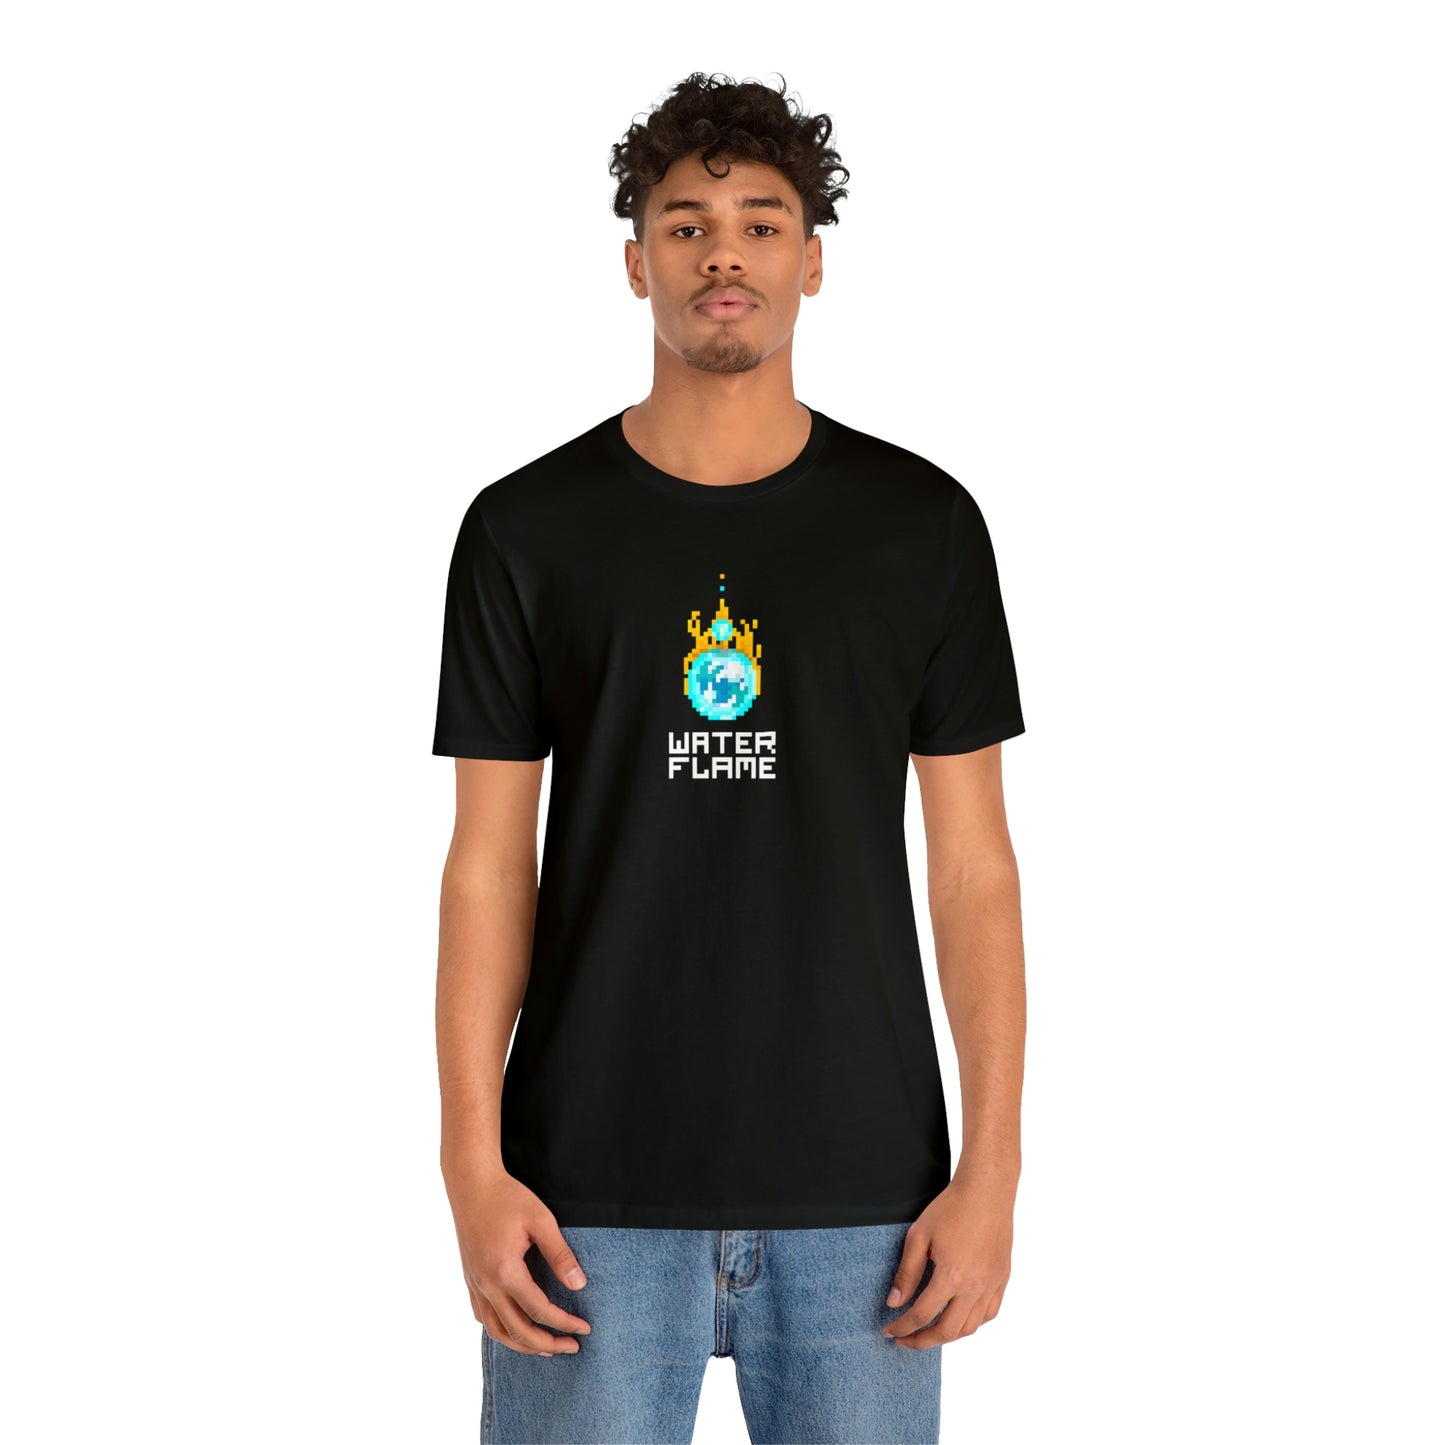 Waterflame T-Shirt